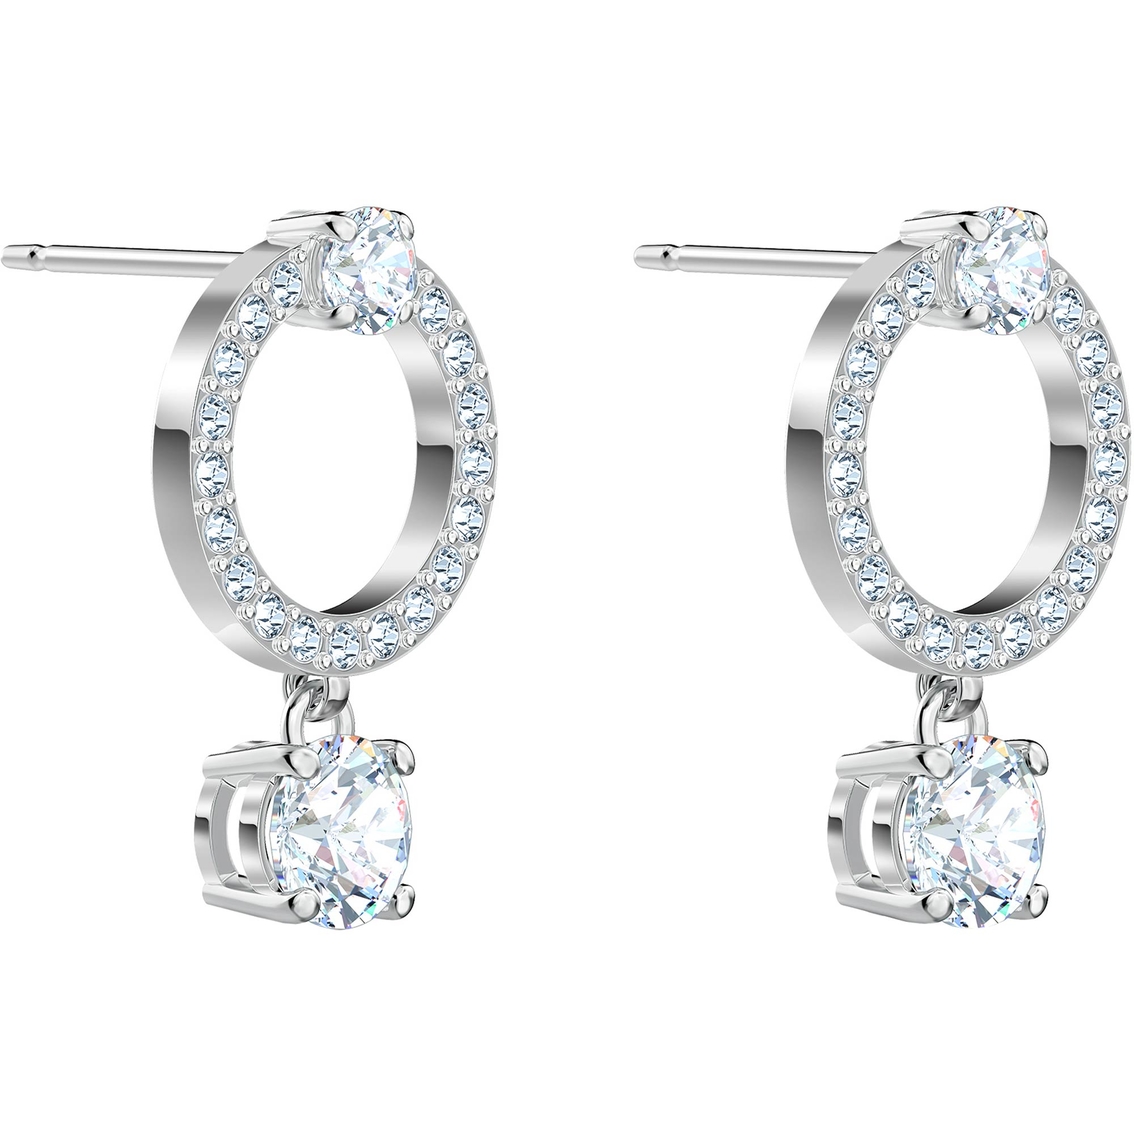 Swarovski Silvertone Attract Circle Stud Earrings - Image 3 of 4